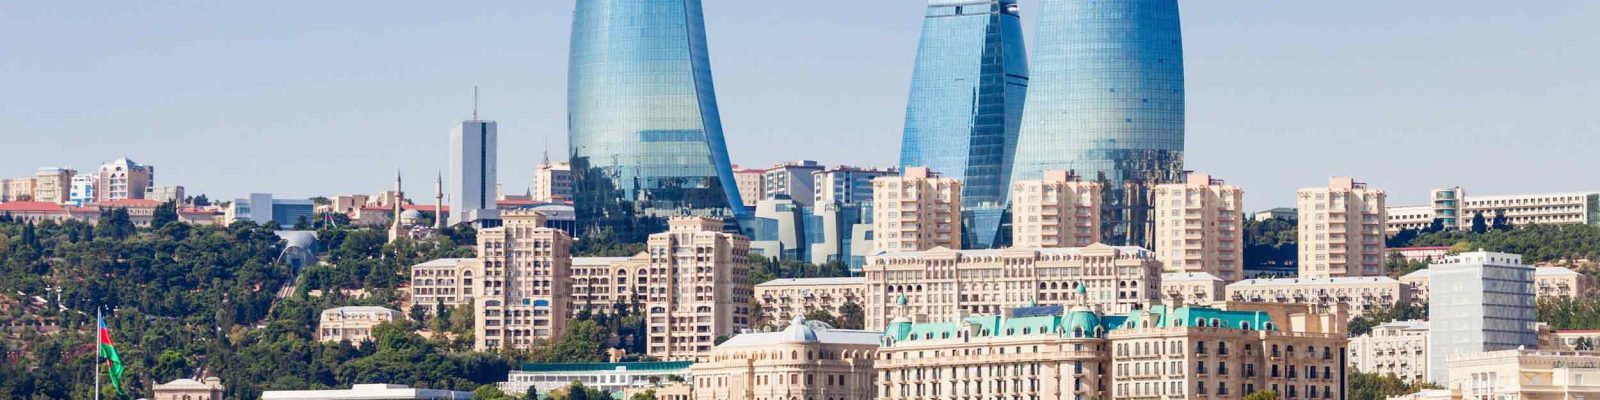 View of the skyscrapers of Baku in Azerbaijan